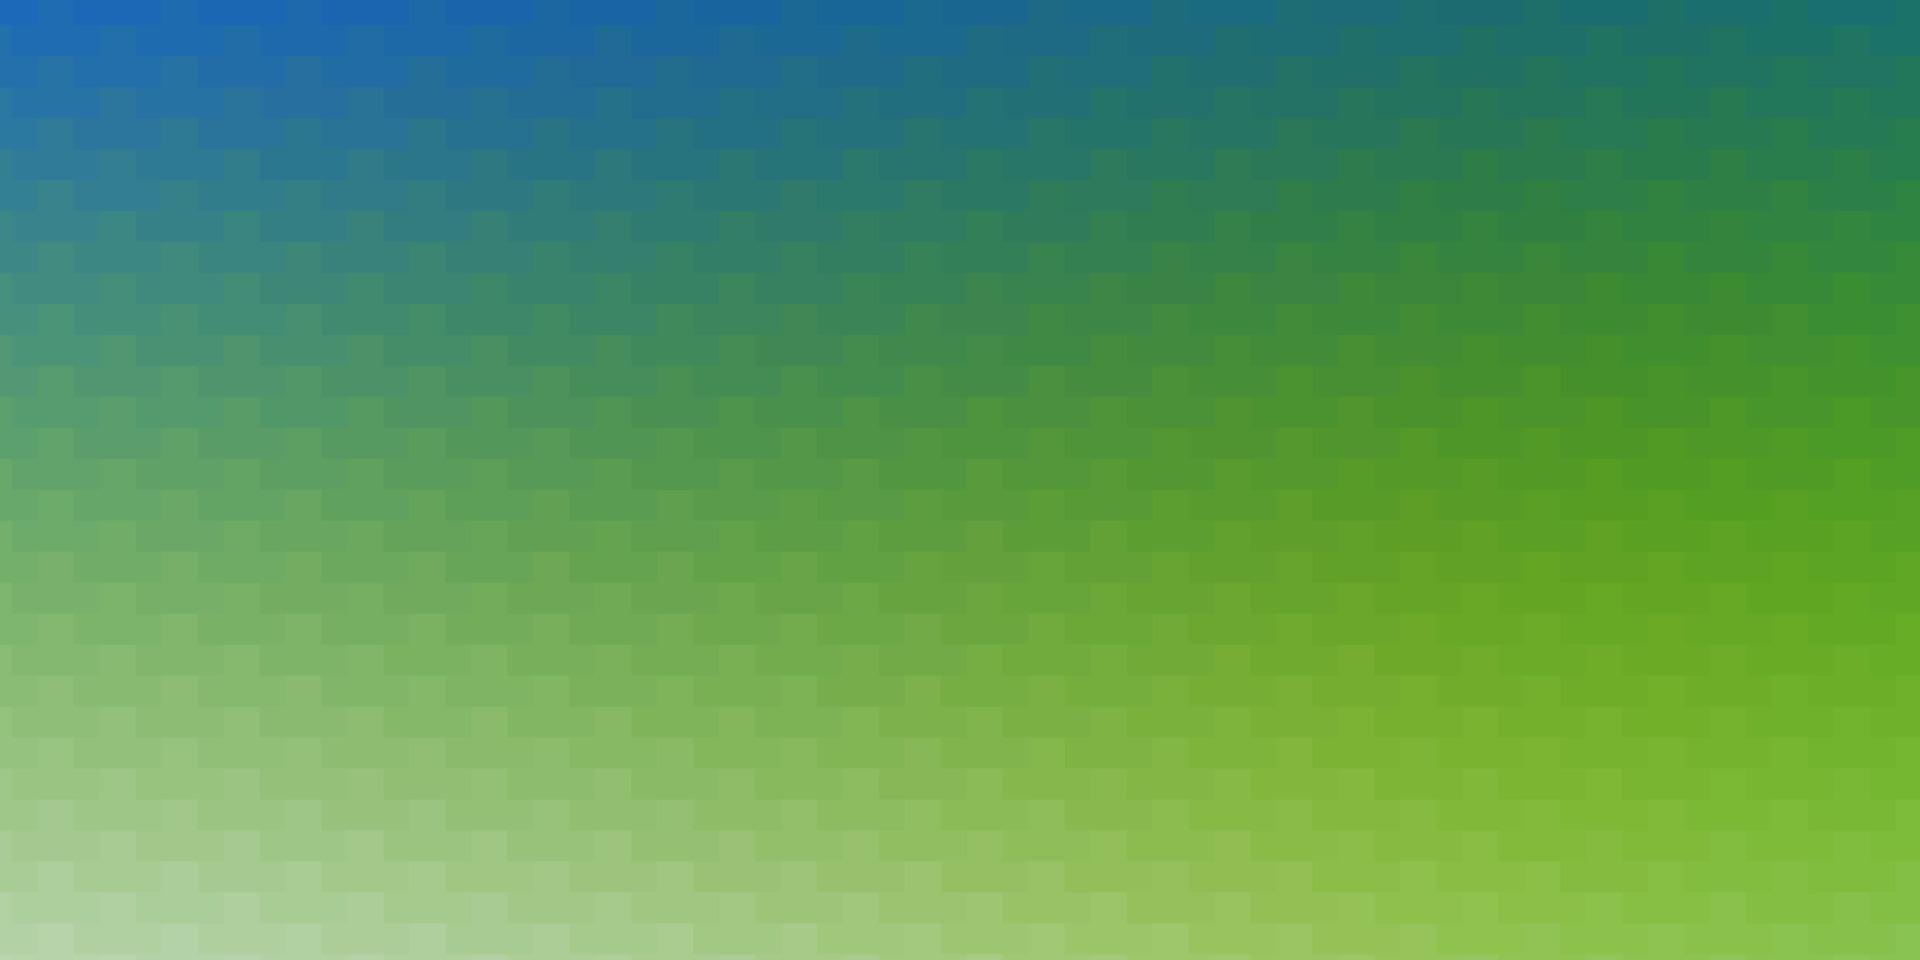 fond de vecteur bleu clair, vert avec des rectangles.